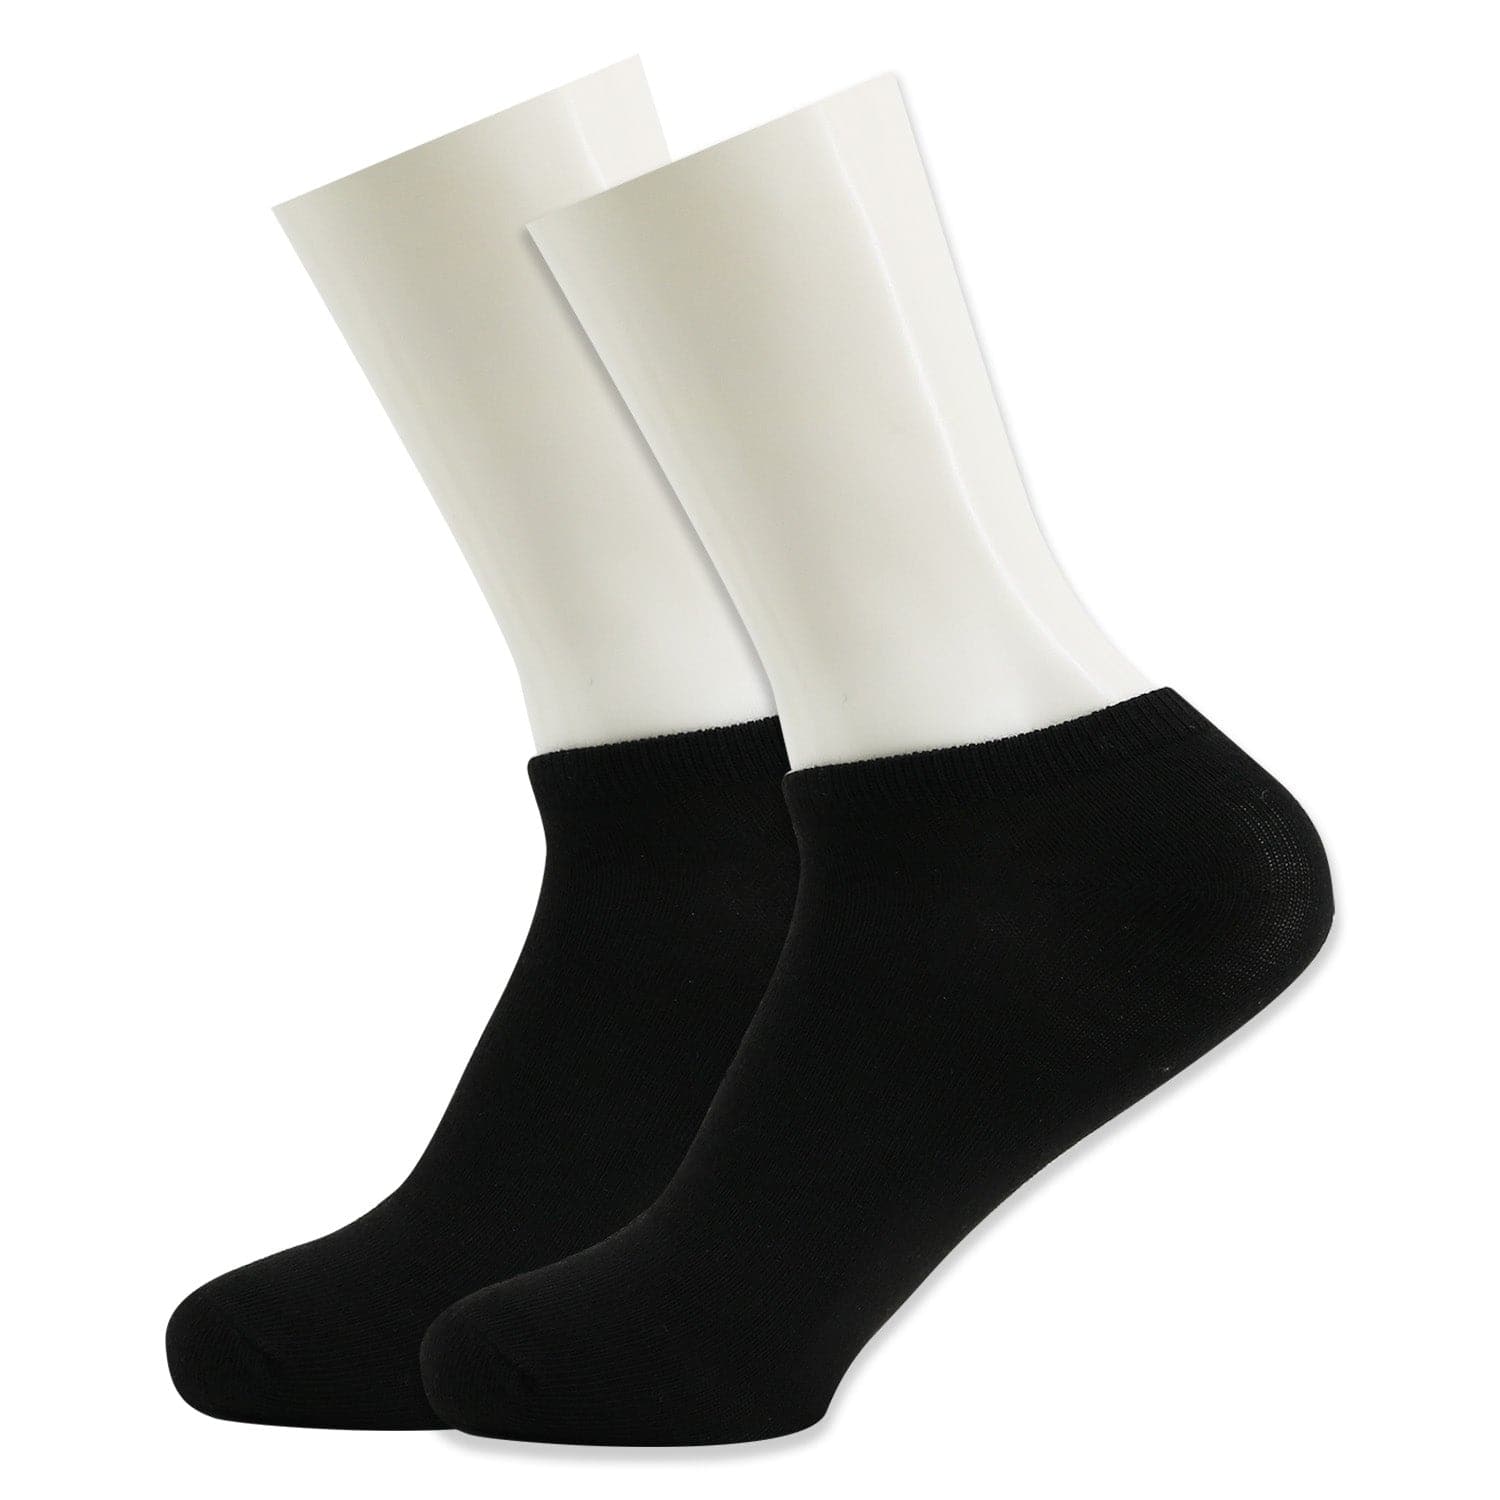 Women's No Show Wholesale Sock, Size 9-11 in Black - Bulk Case of 96 Pairs